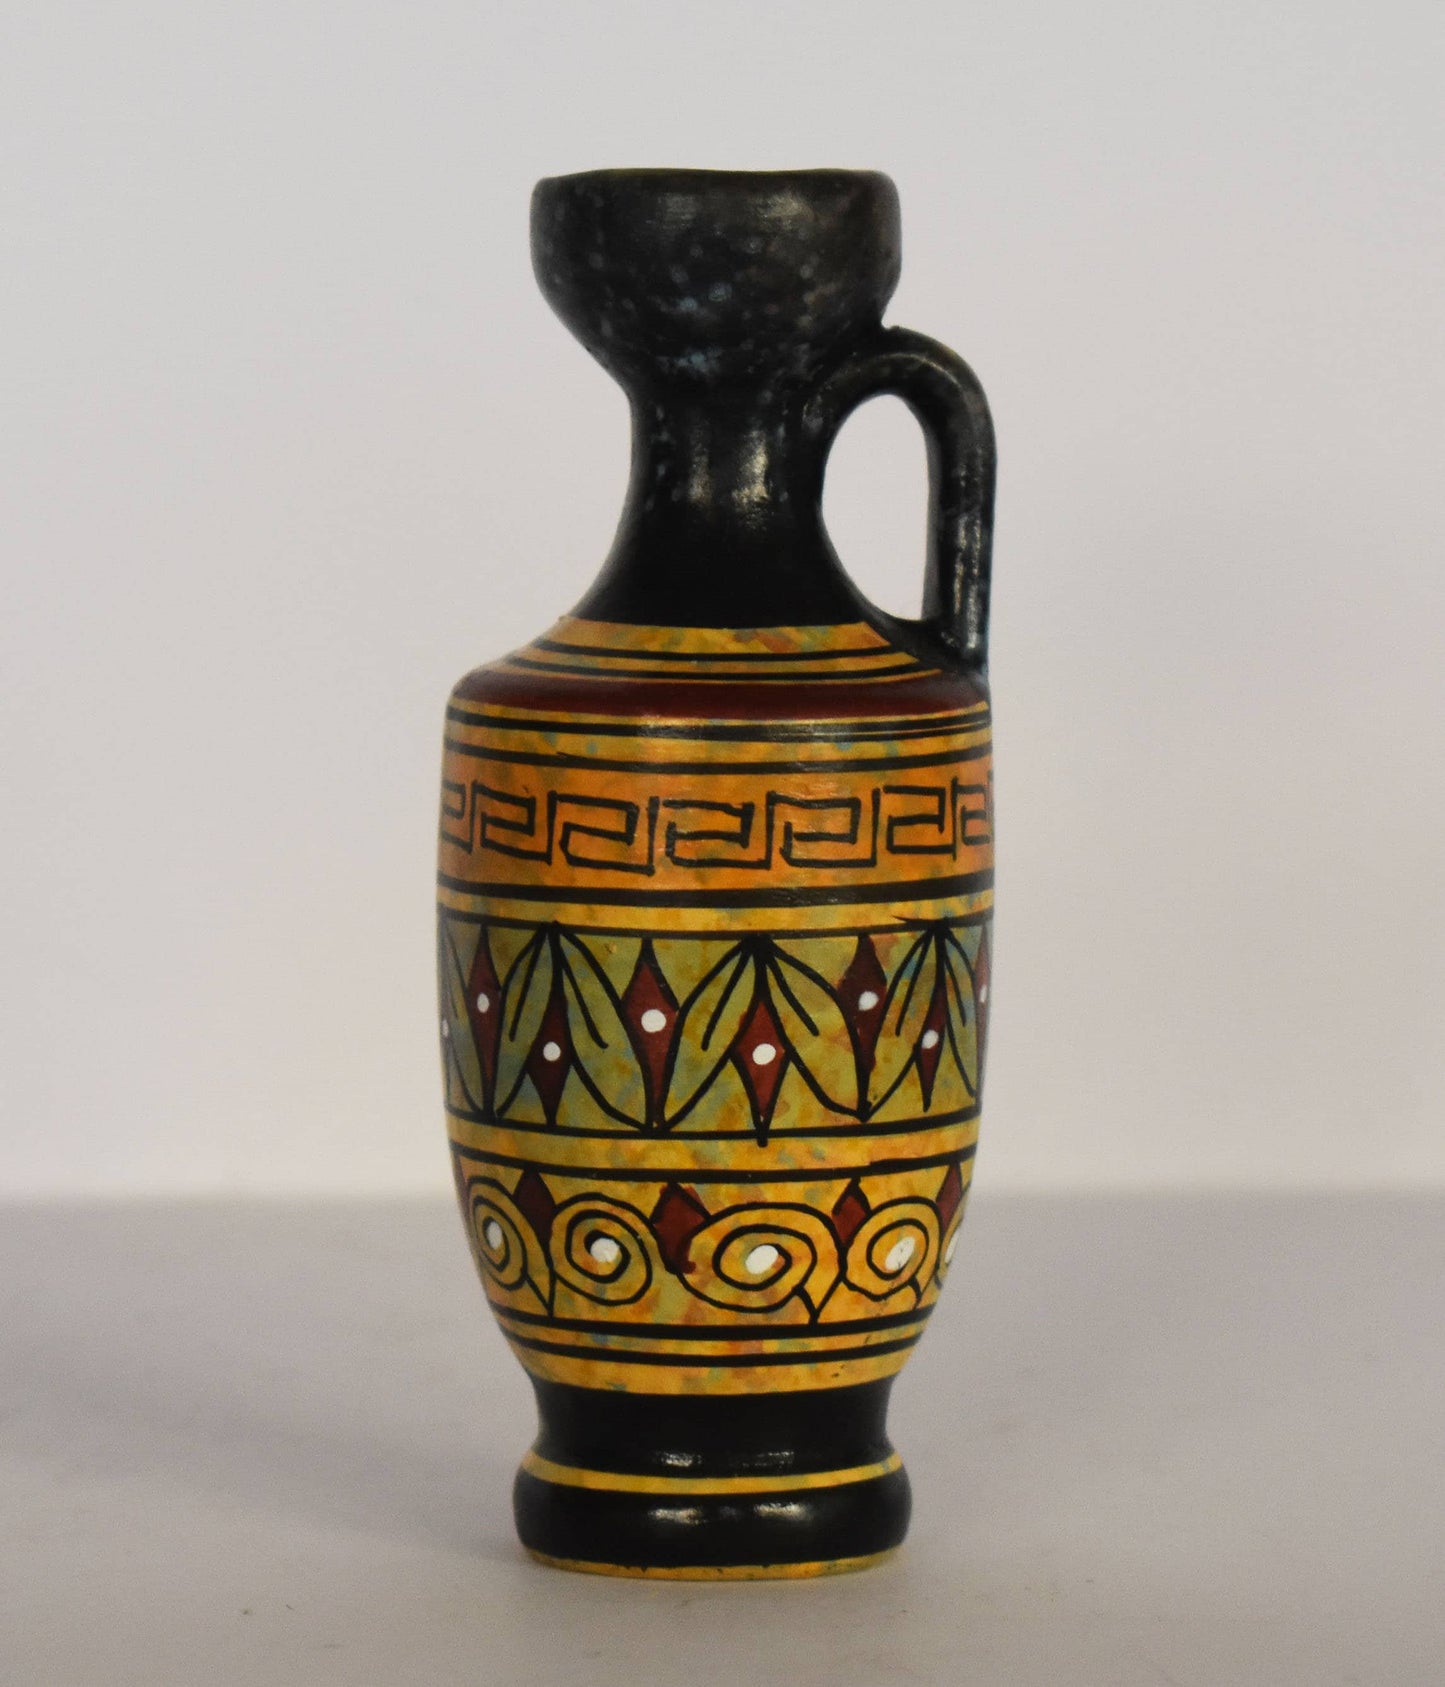 Ancient Greek lekythos - floral decoration - Miniature Ceramic piece - Geometric Period - Handmade in Greece